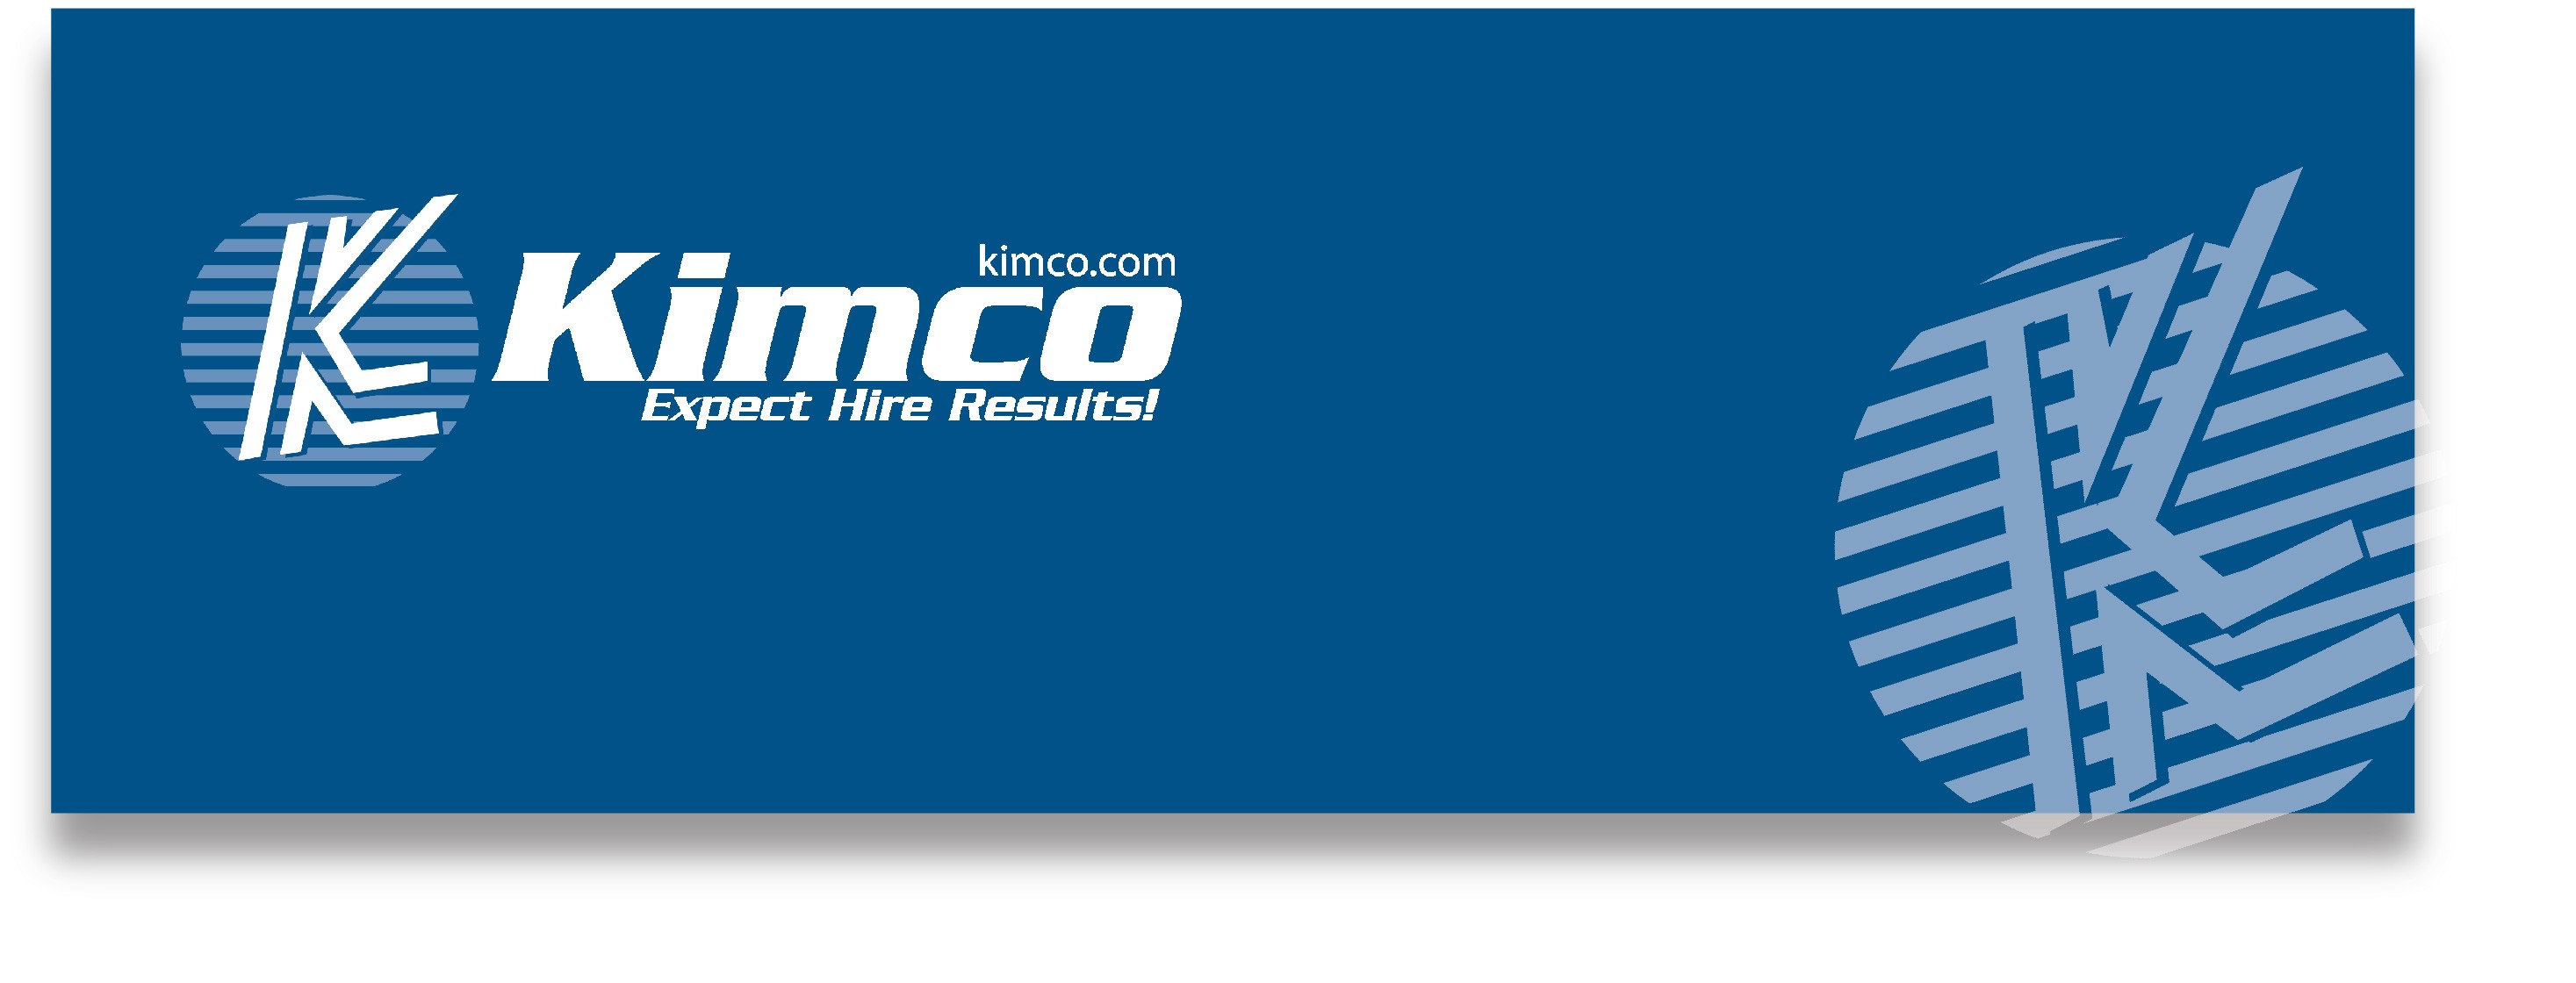 Kimco Staffing Services, Inc. | LinkedIn